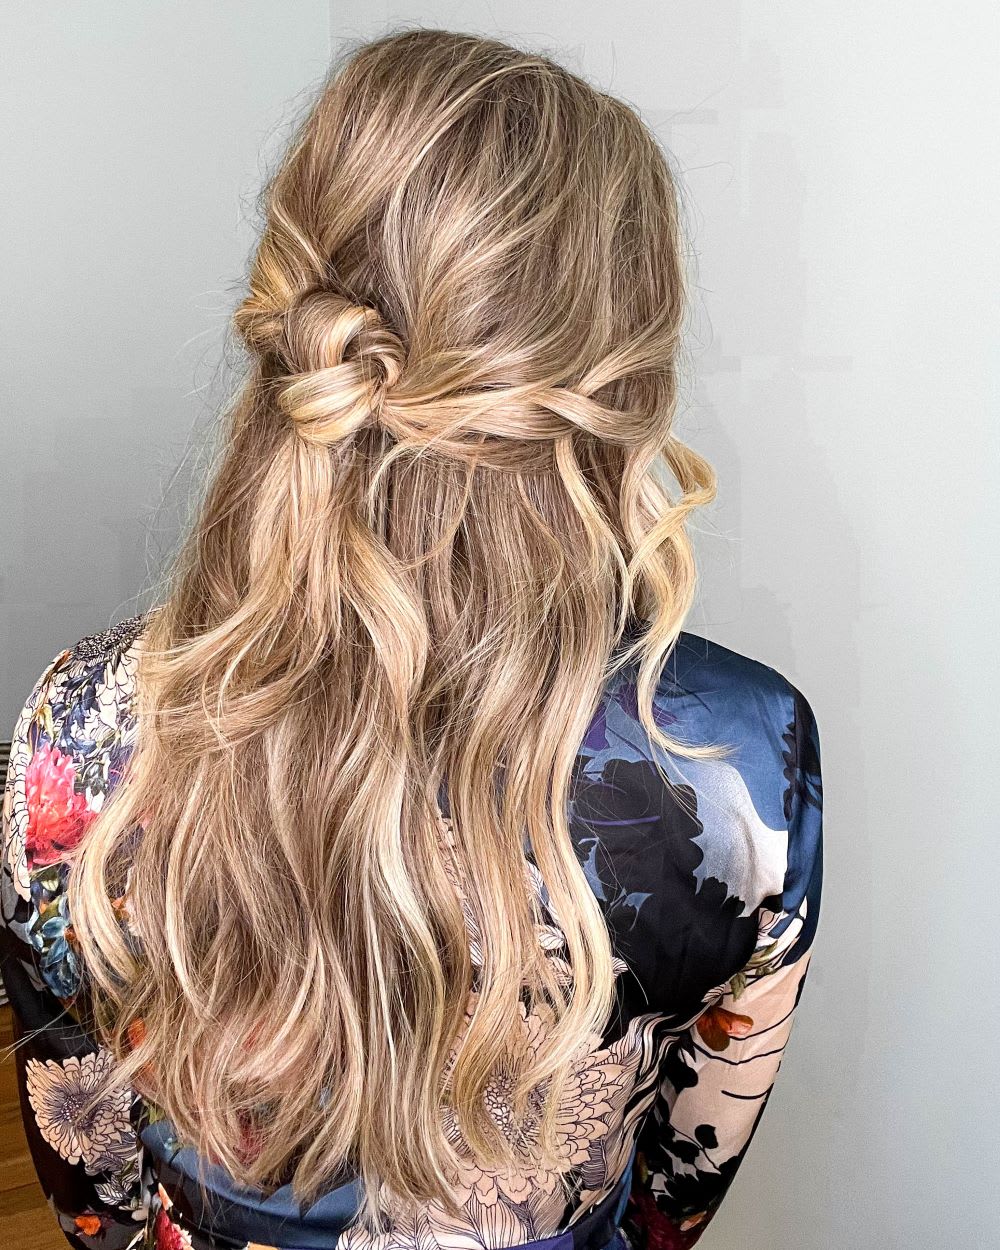 The 10 Best Half-Up, Half-Down Wedding Hairstyles – StyleCaster